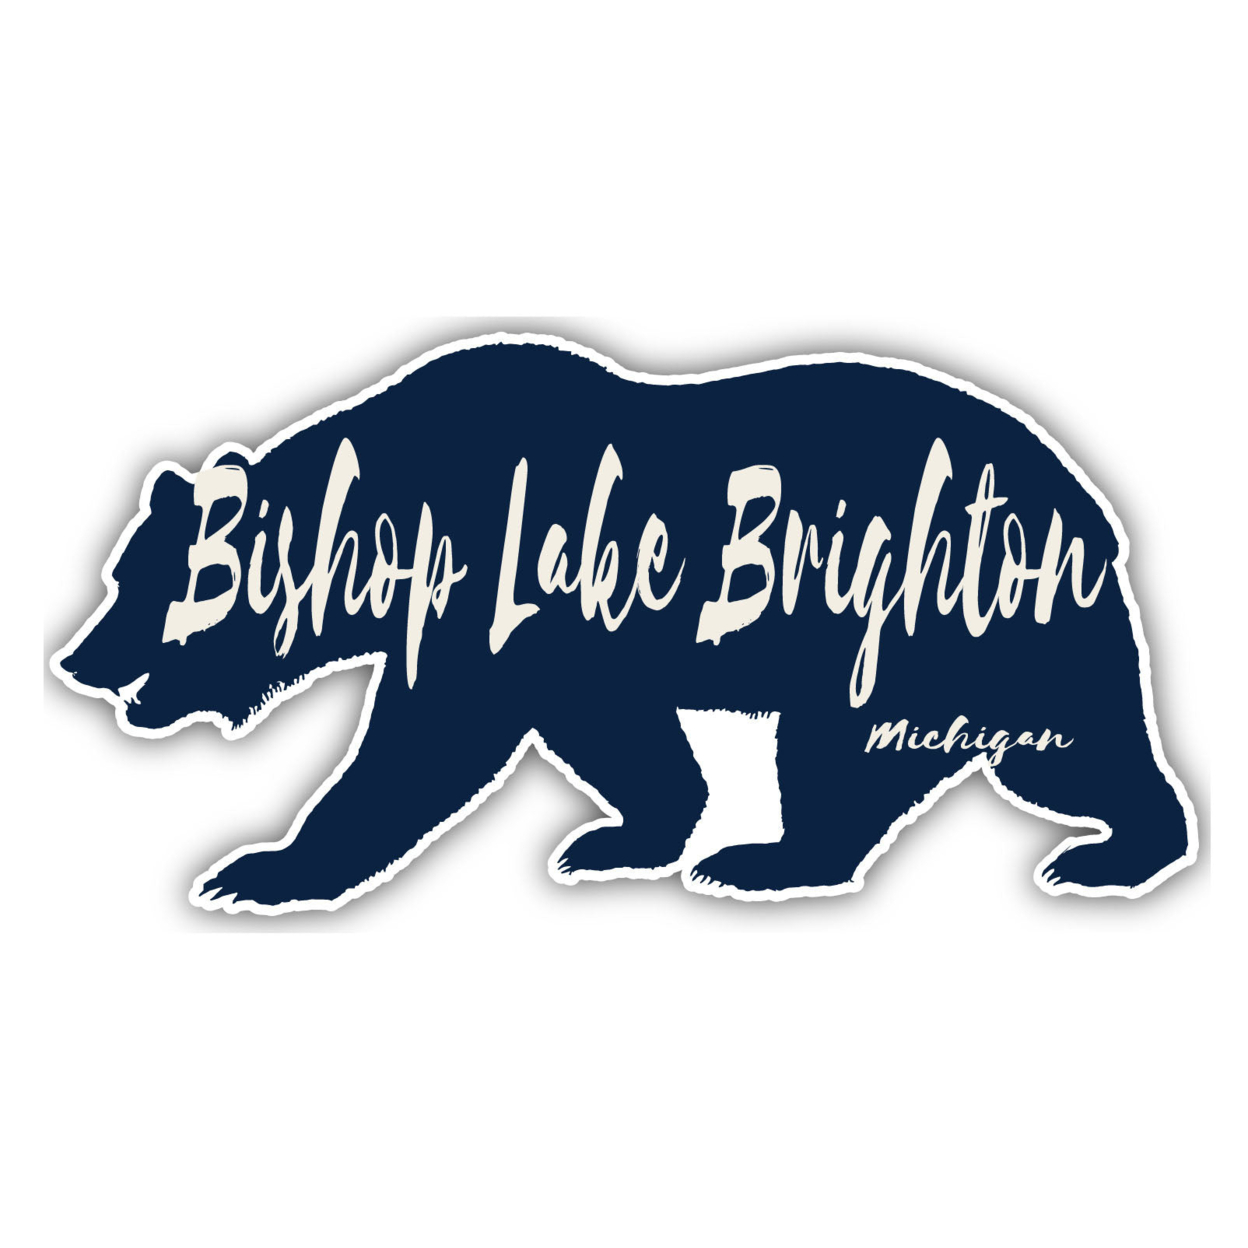 Bishop Lake Brighton Michigan Souvenir Decorative Stickers (Choose Theme And Size) - 4-Pack, 8-Inch, Bear